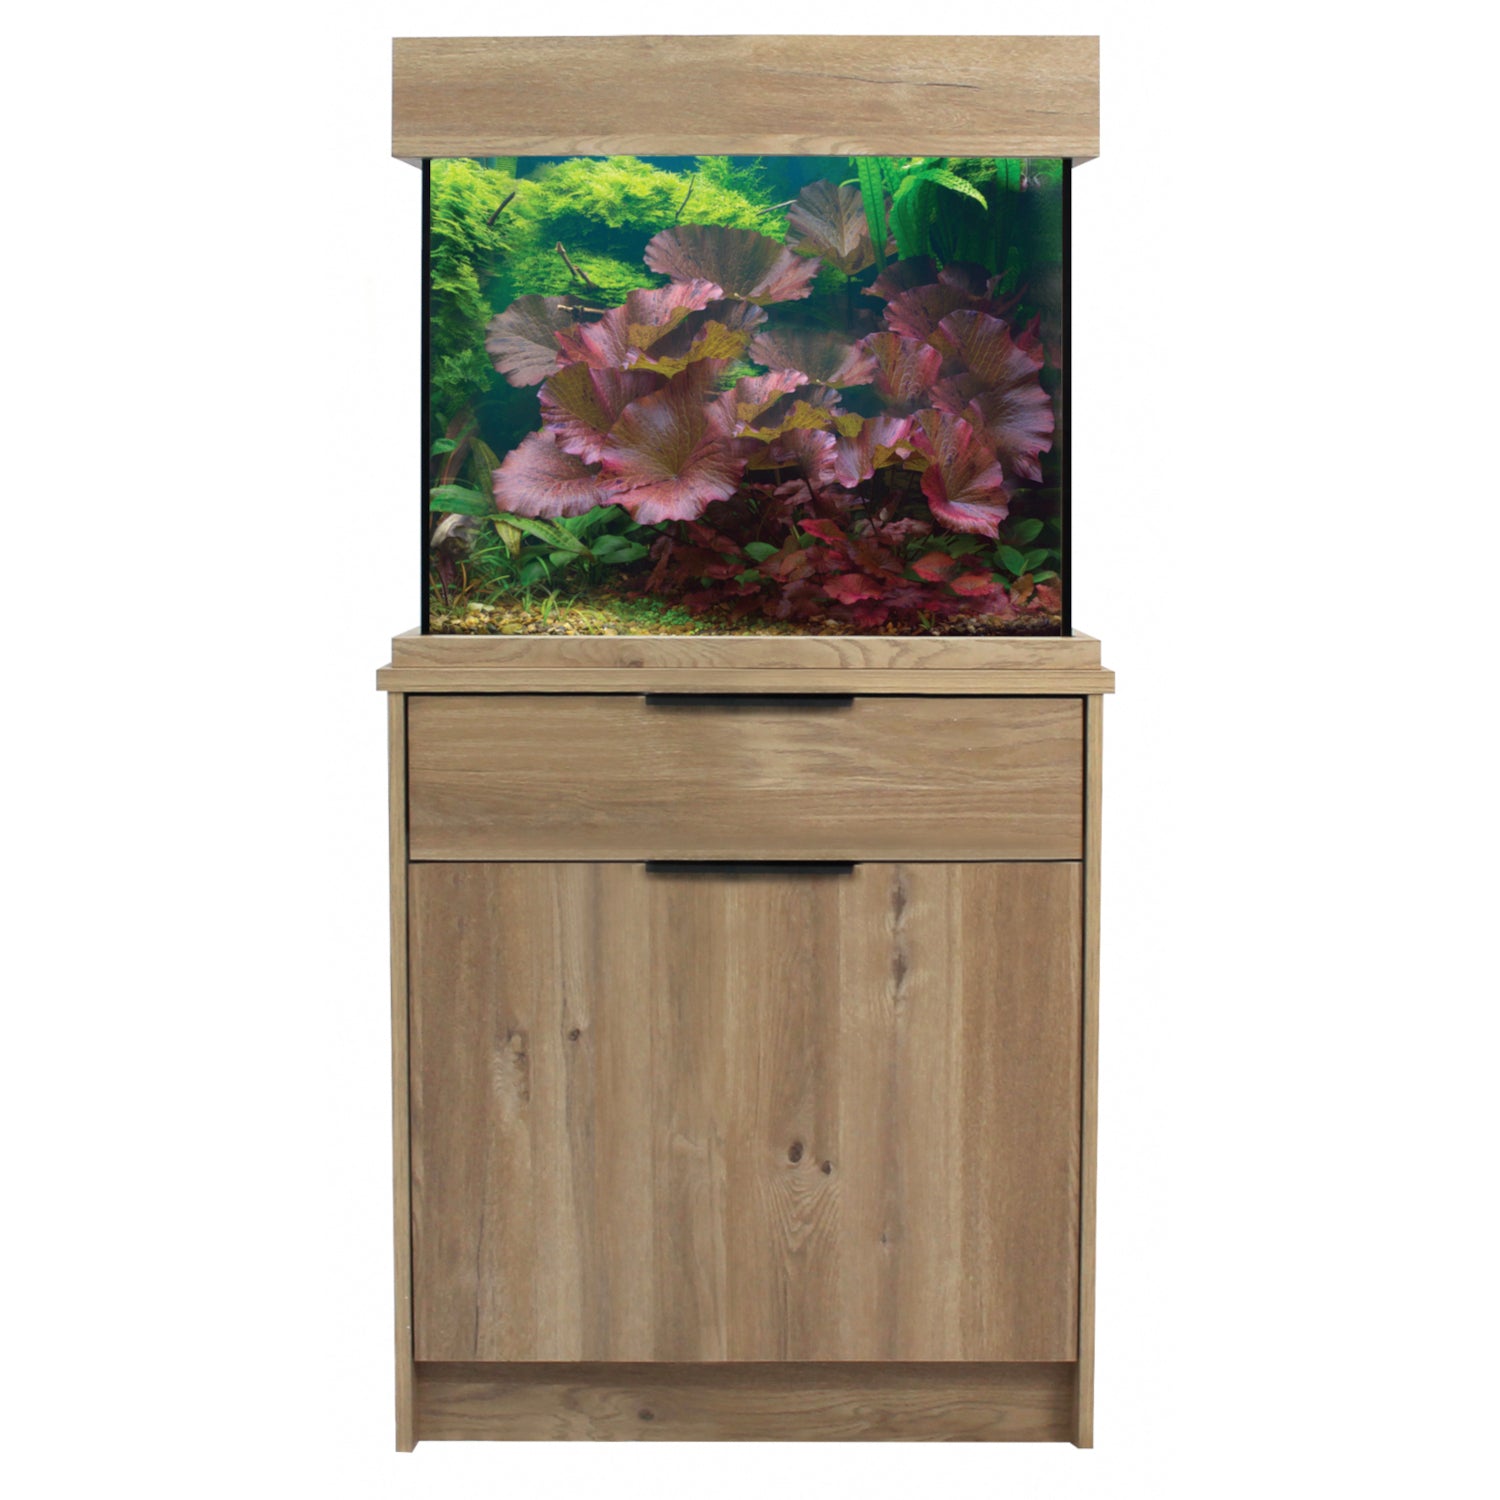 Aqua One Nash Oak Style Aquarium Fish Tank with Cabinet 63cm 110L